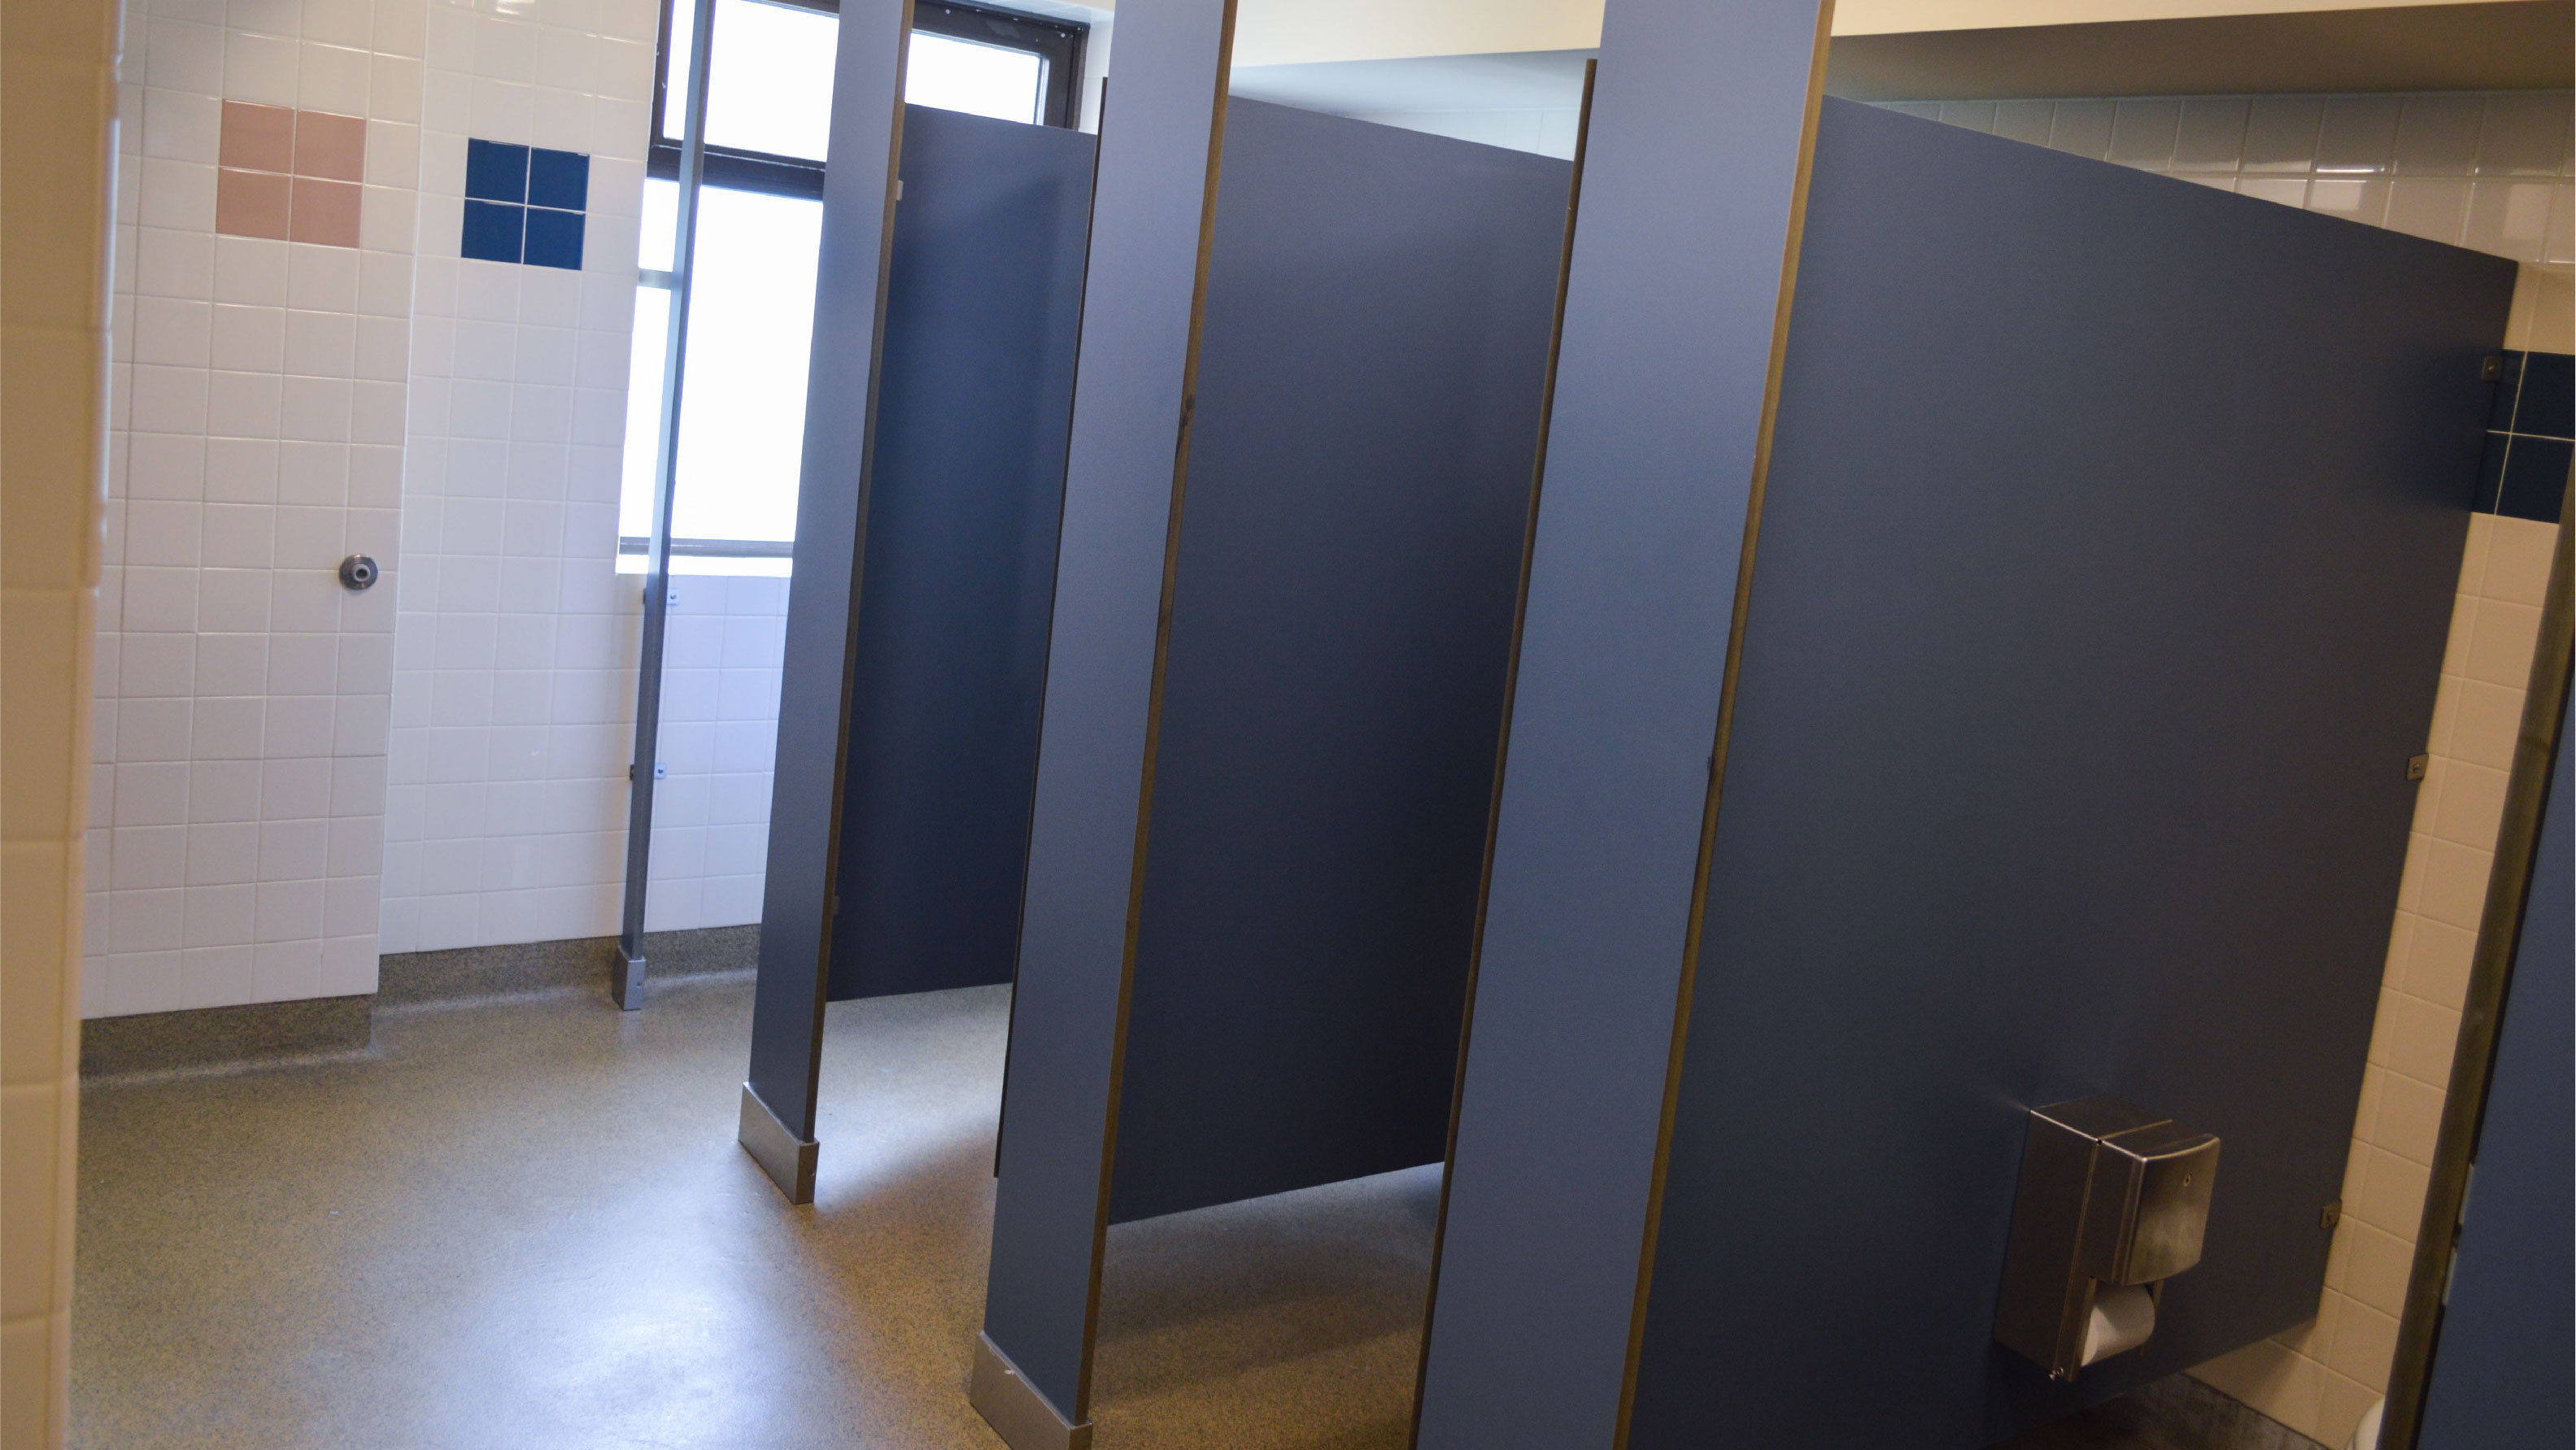 Community-style Bathroom - Toilet Stalls